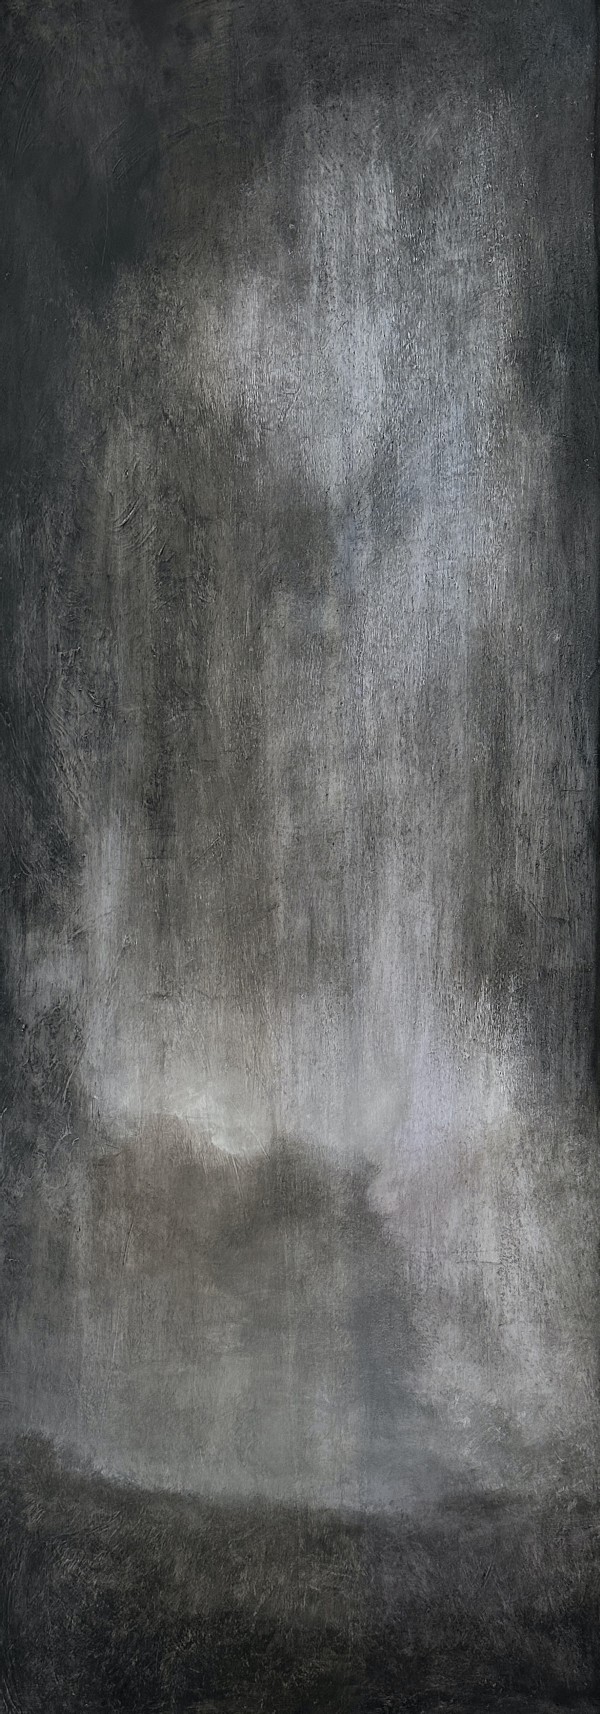 Shimmer by Elizabeth Hasegawa Agresta